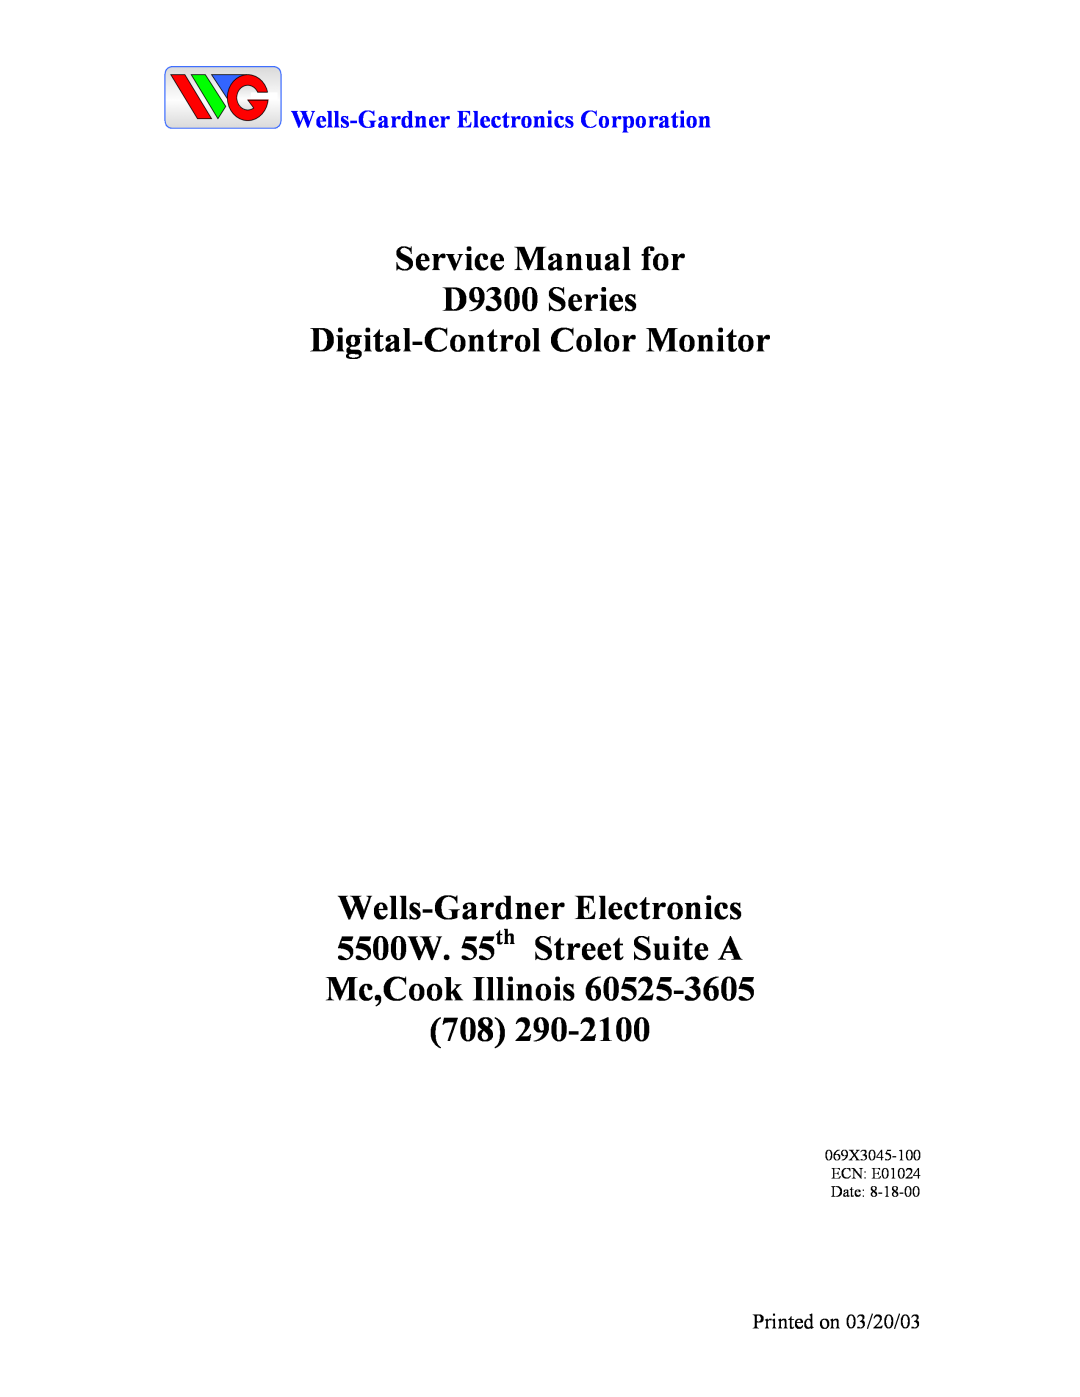 Wells-Gardner D9300 Series service manual Wells-Gardner Electronics Corporation, Printed on 03/20/03 